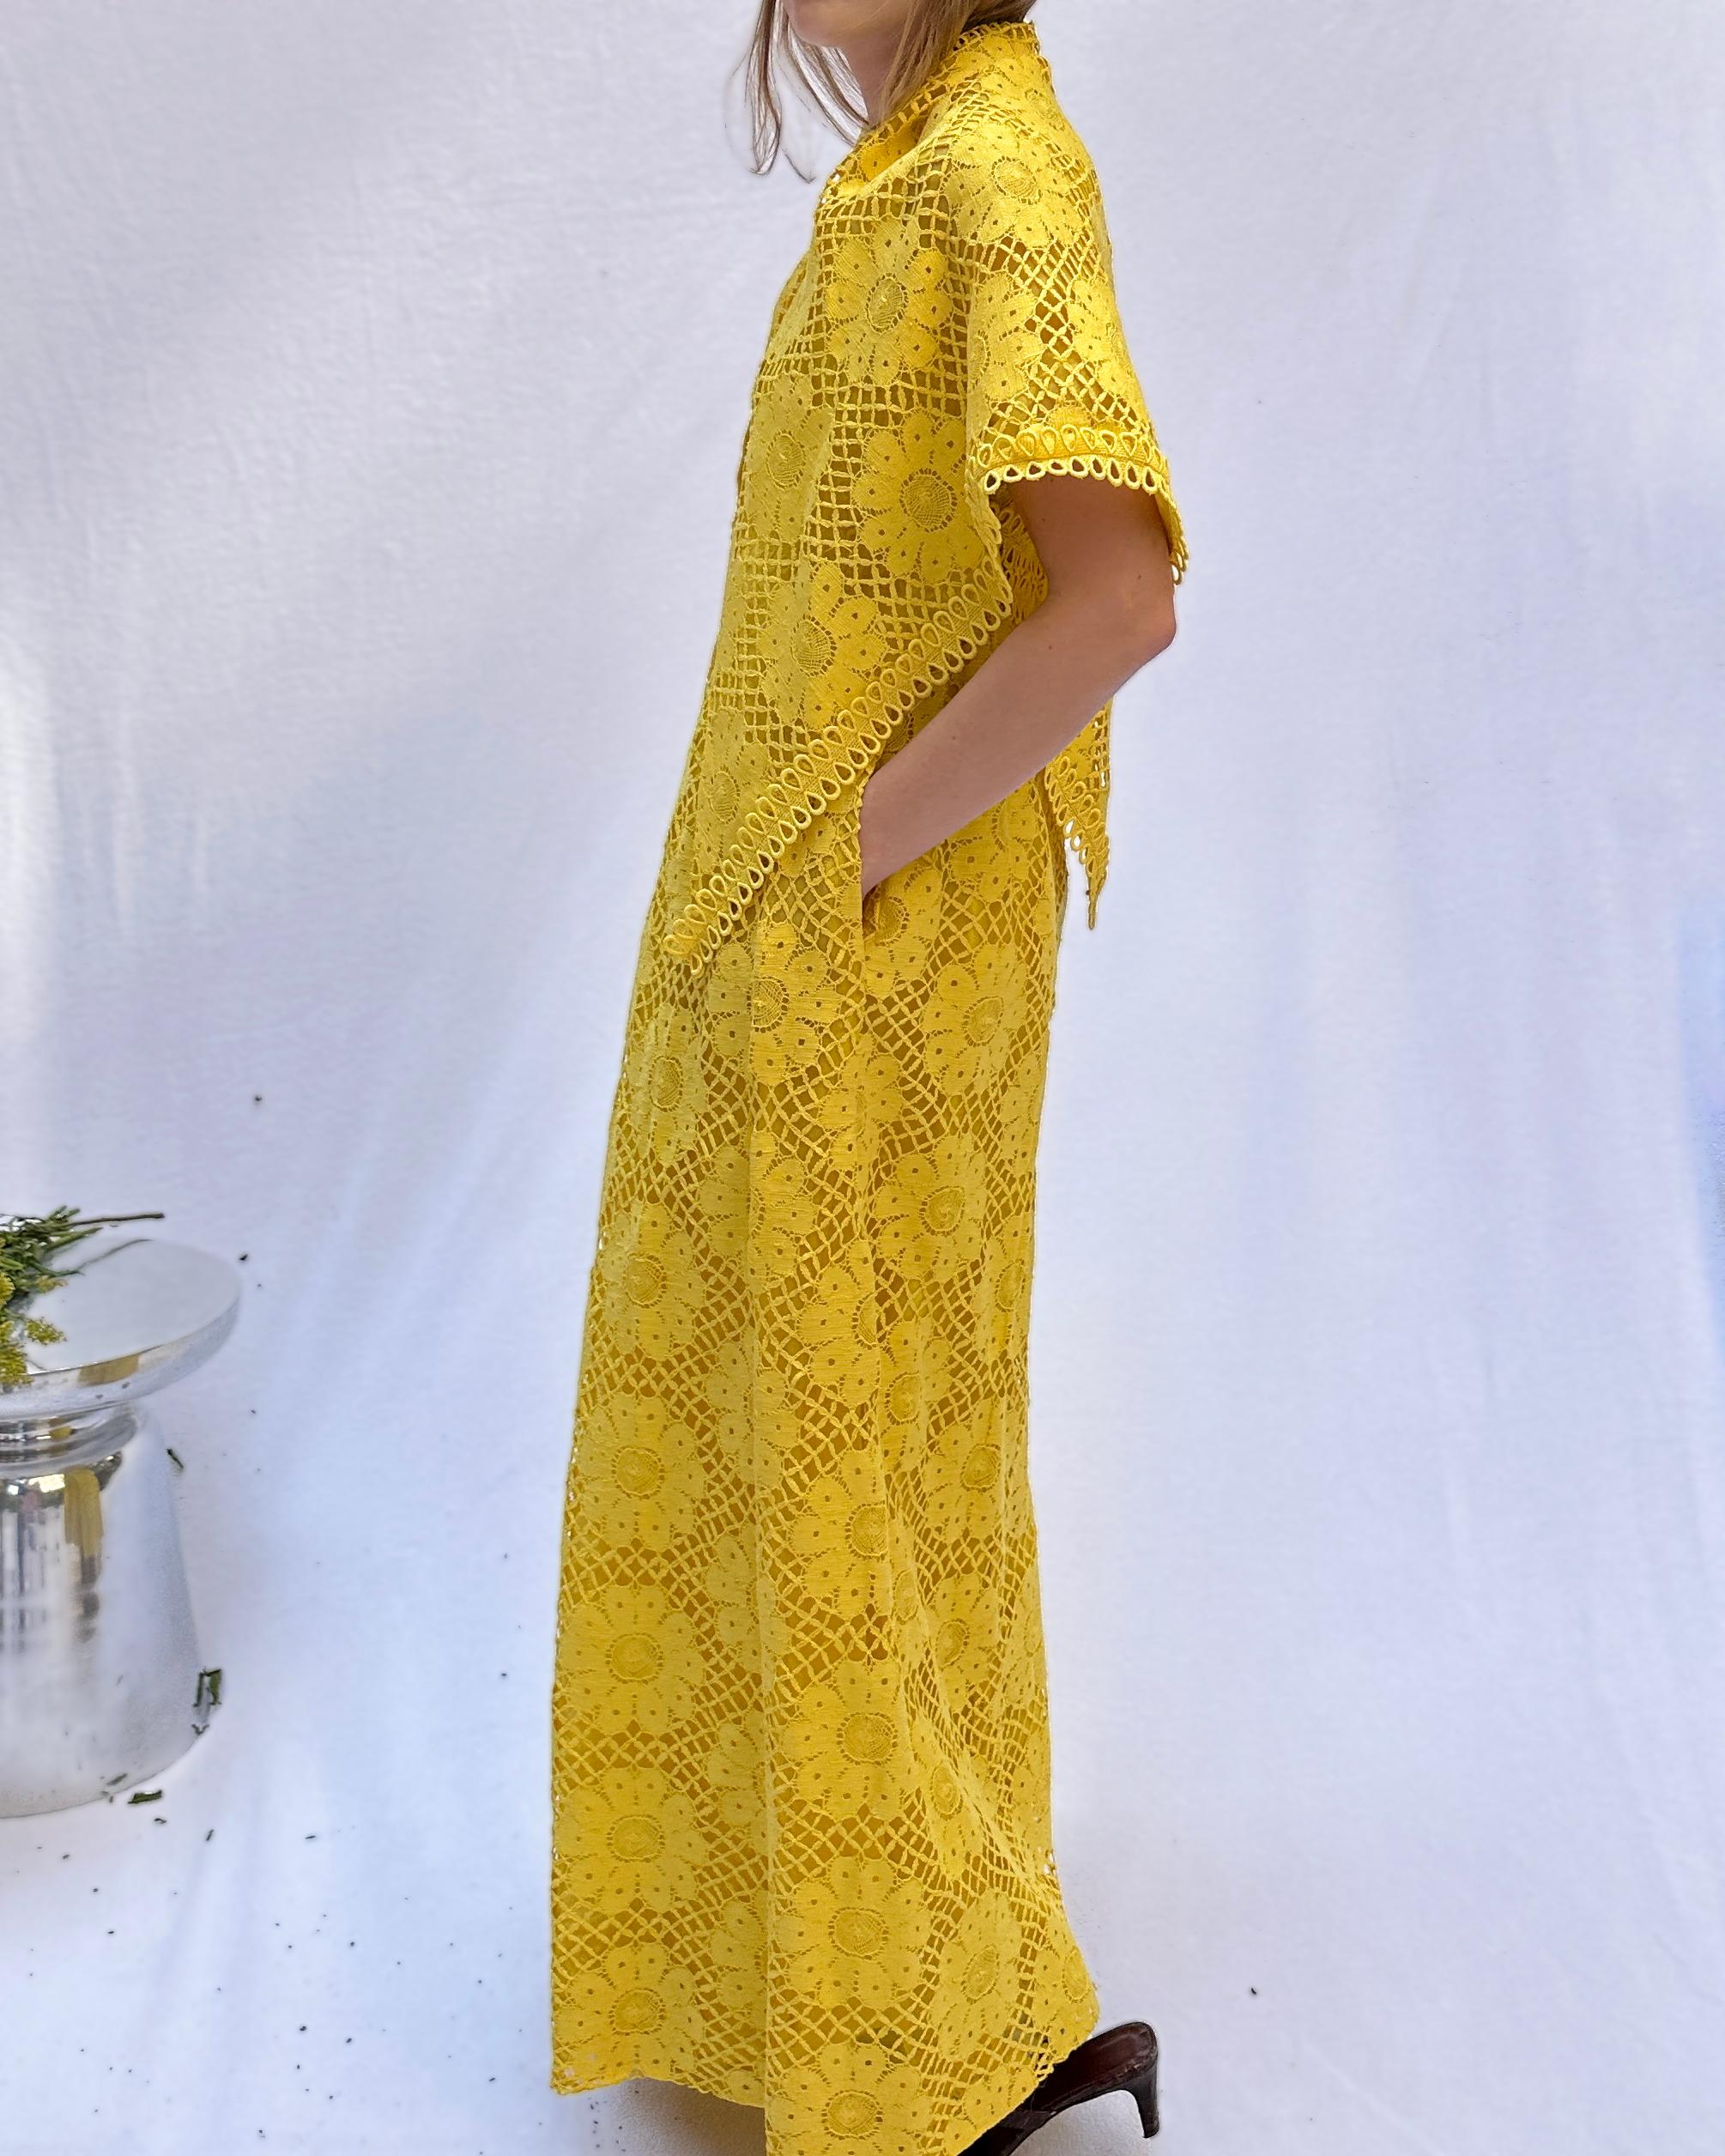 Lillie Rubin - Robe colonne en dentelle crochetée vintage Bon état - En vente à New York, NY